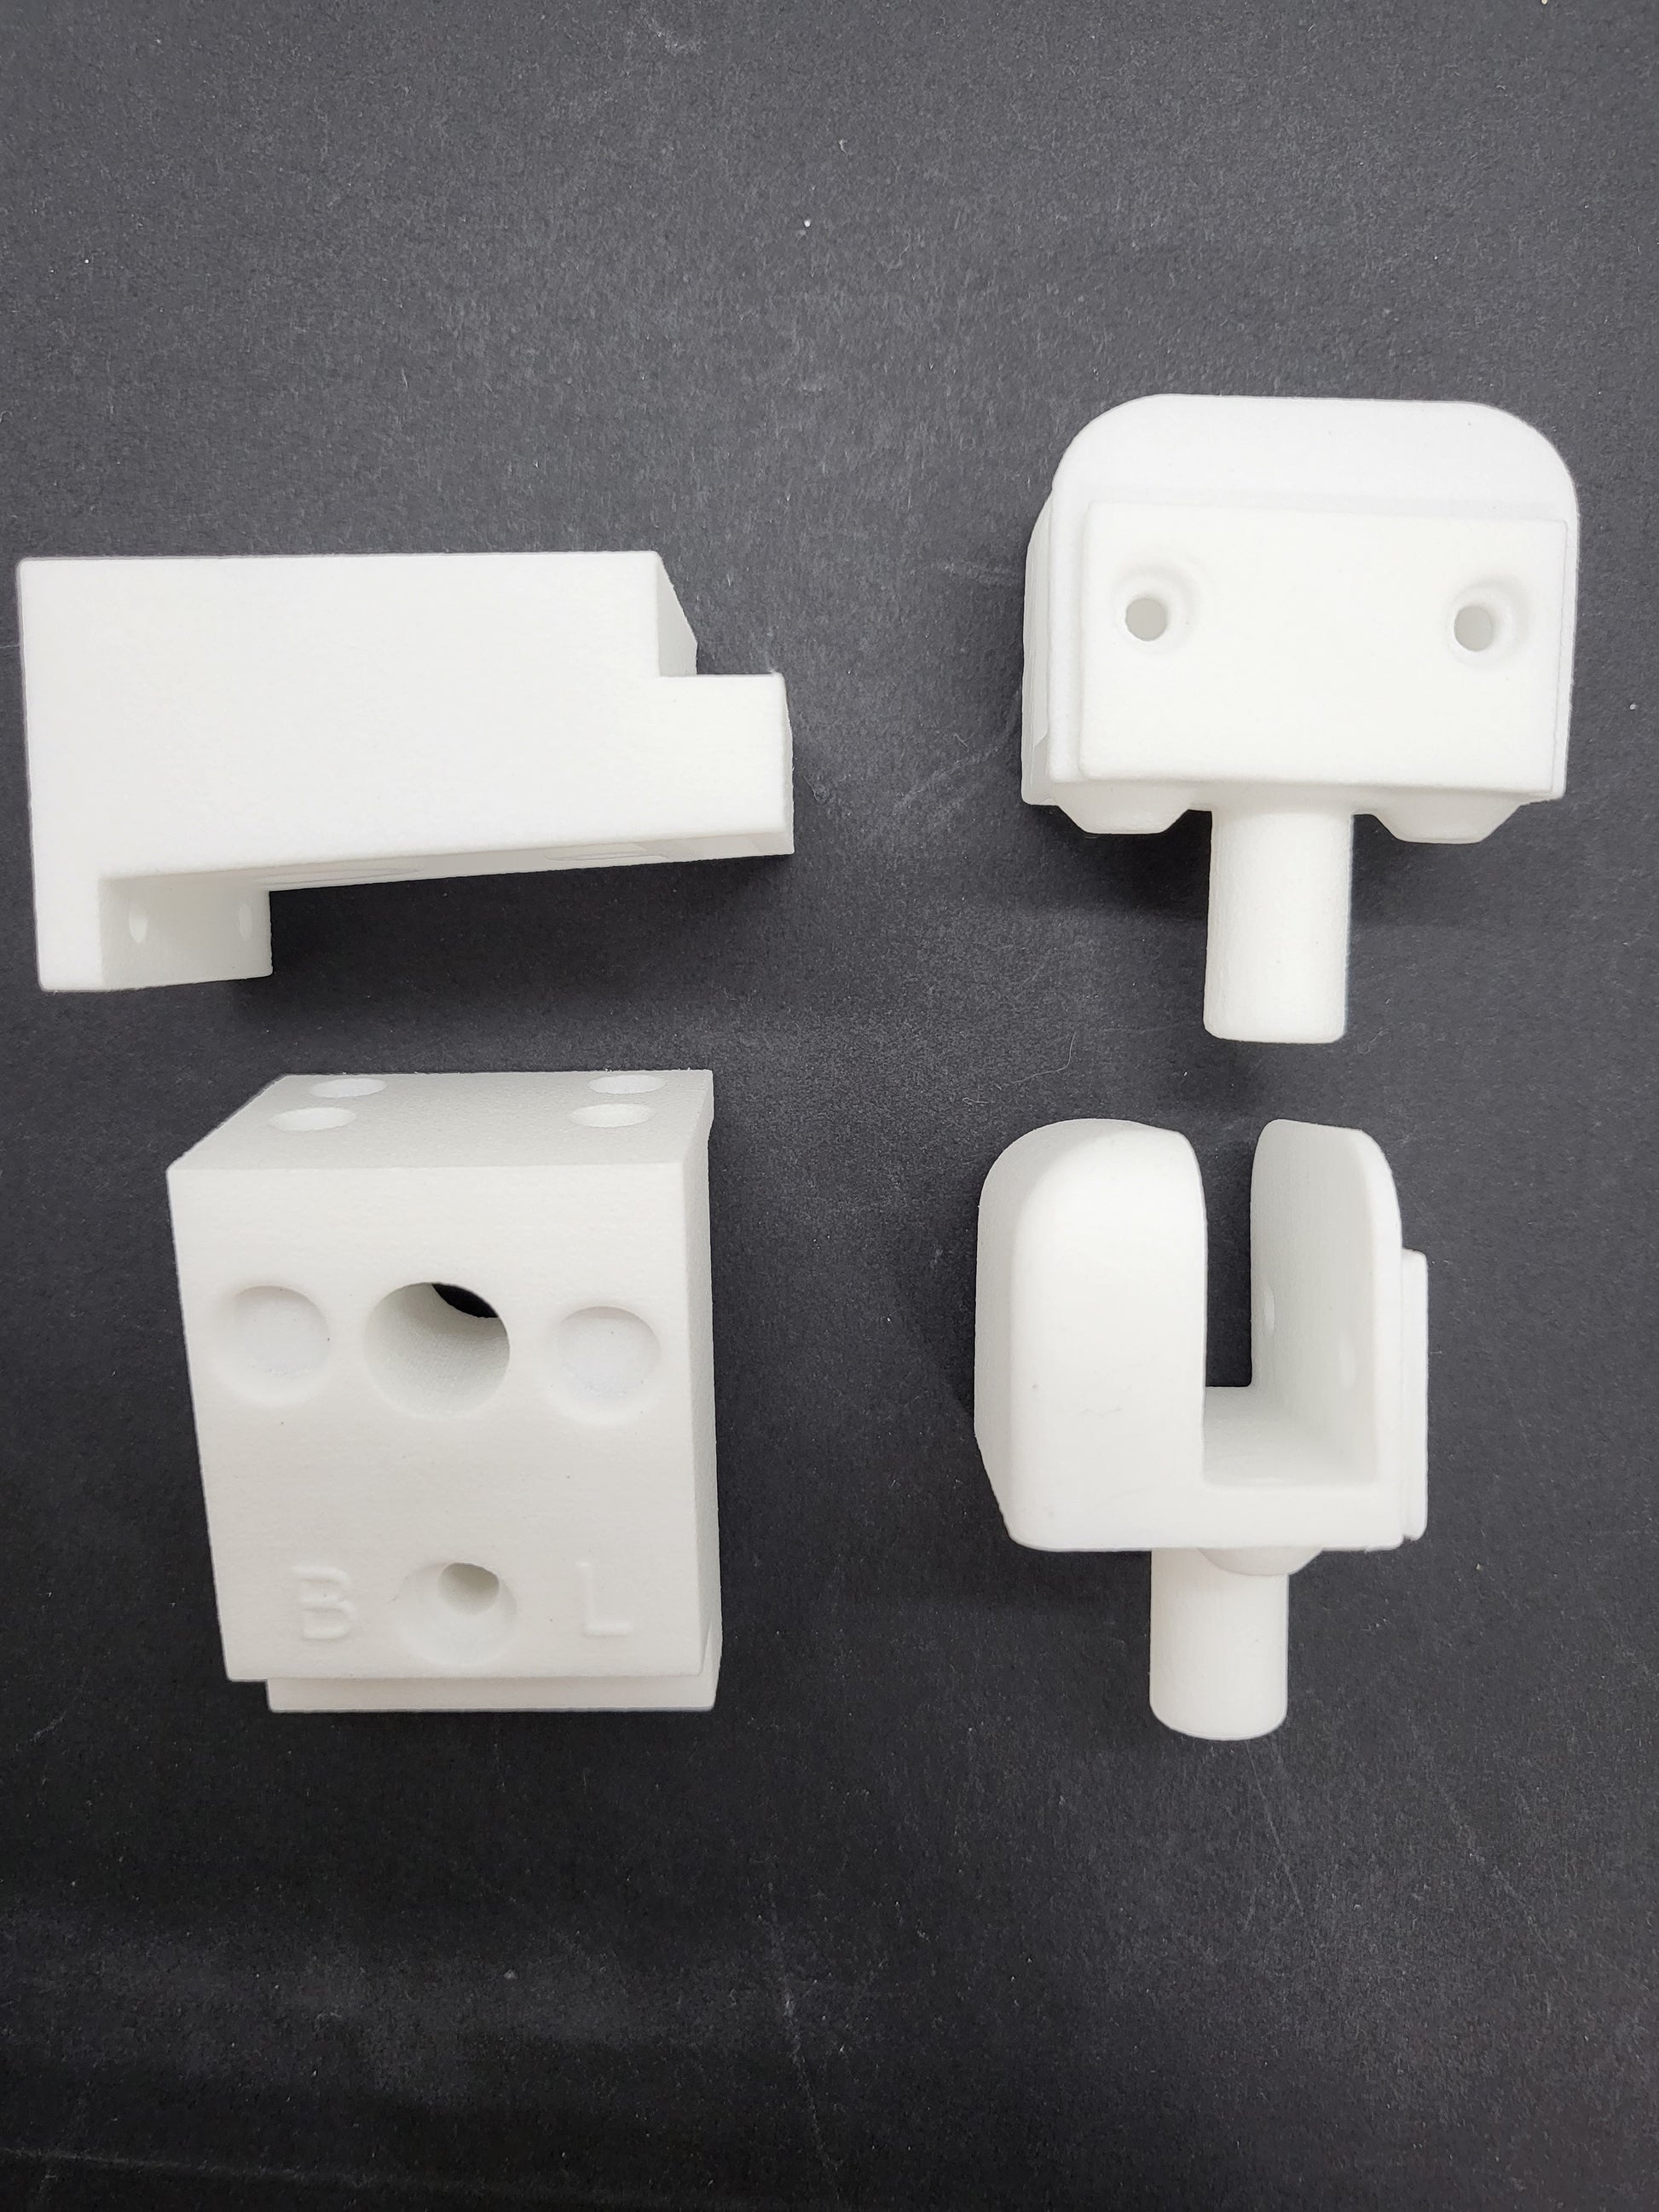 Boral Shower Kit - 4 piece - White & Black - Sold as kit - 3D printed